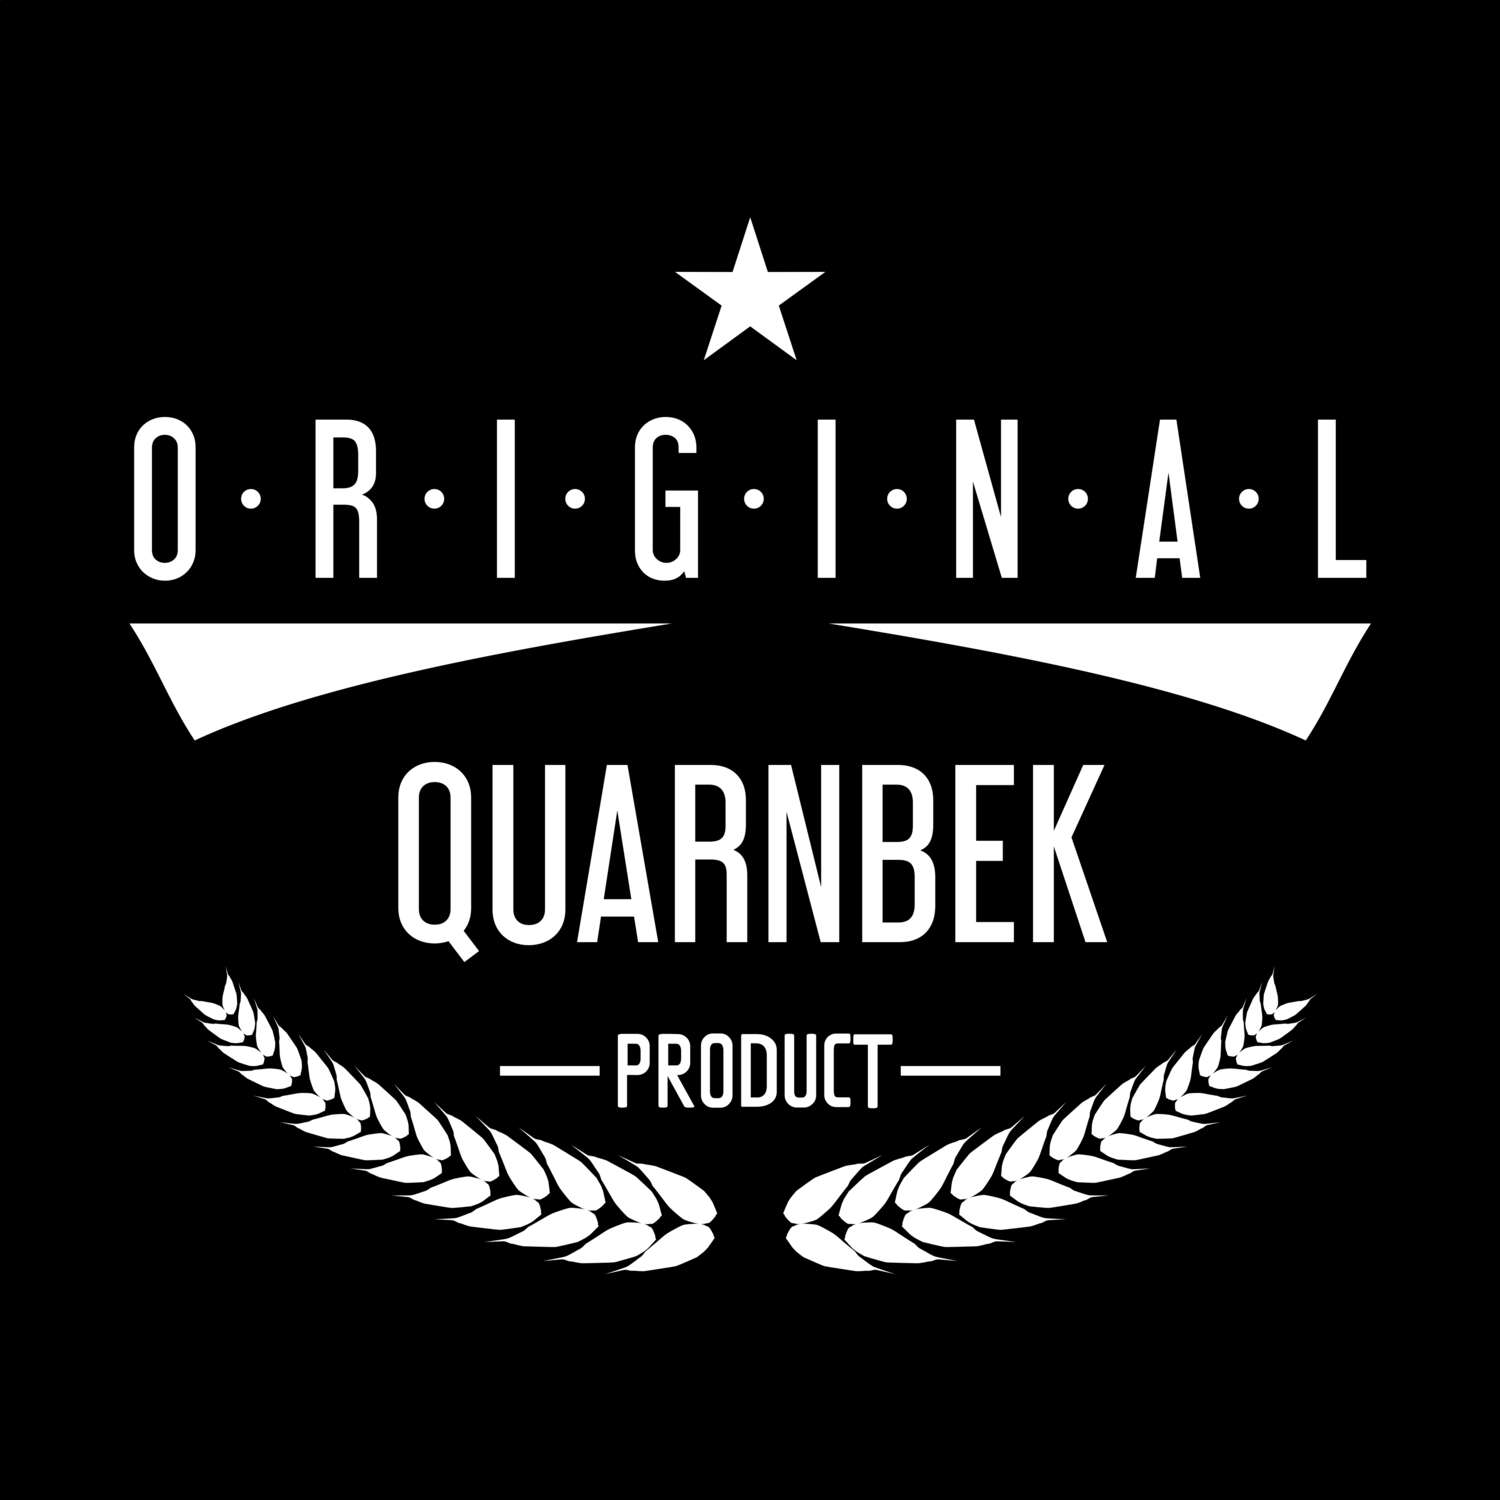 Quarnbek T-Shirt »Original Product«